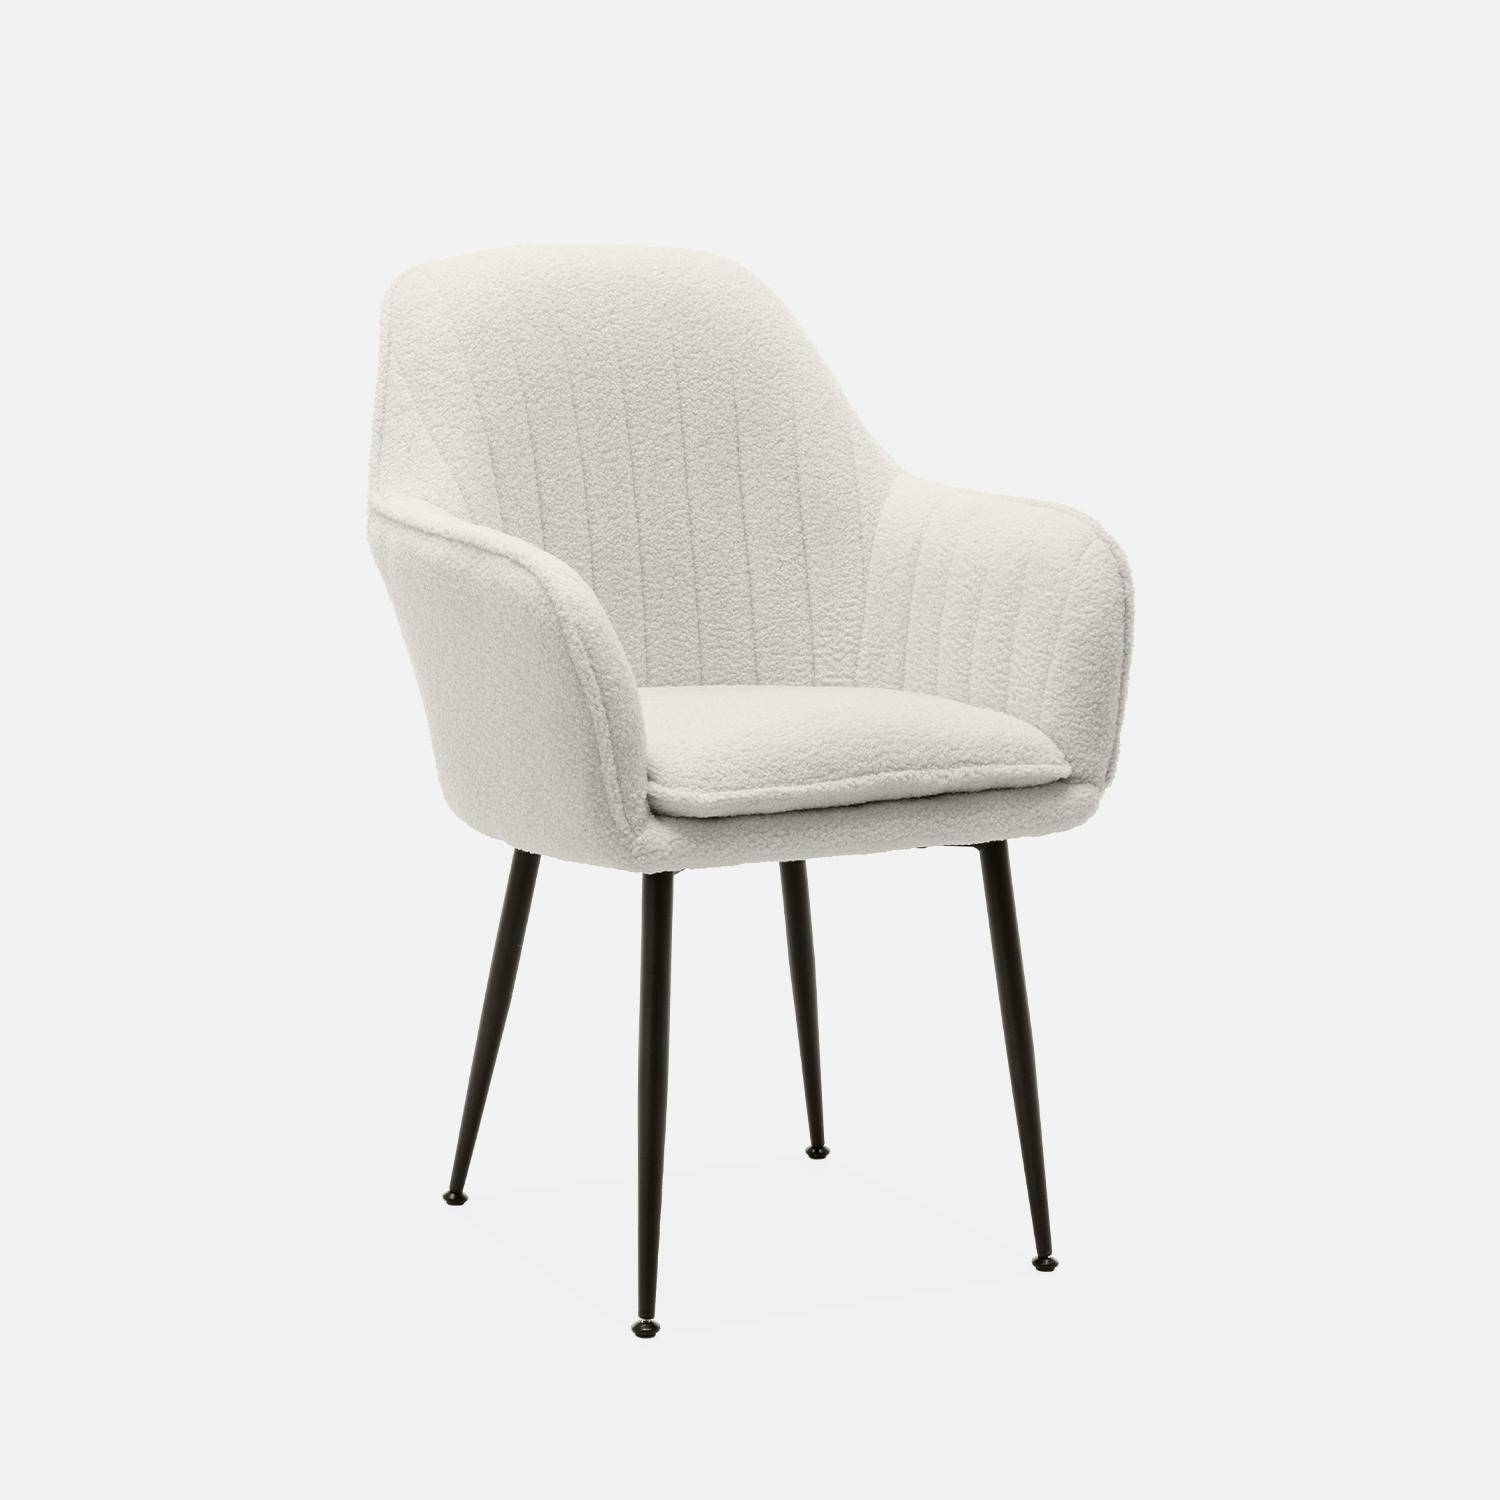 Boucle armchair with metal legs, 58x58x85cm - Shella Boucle - White,sweeek,Photo3